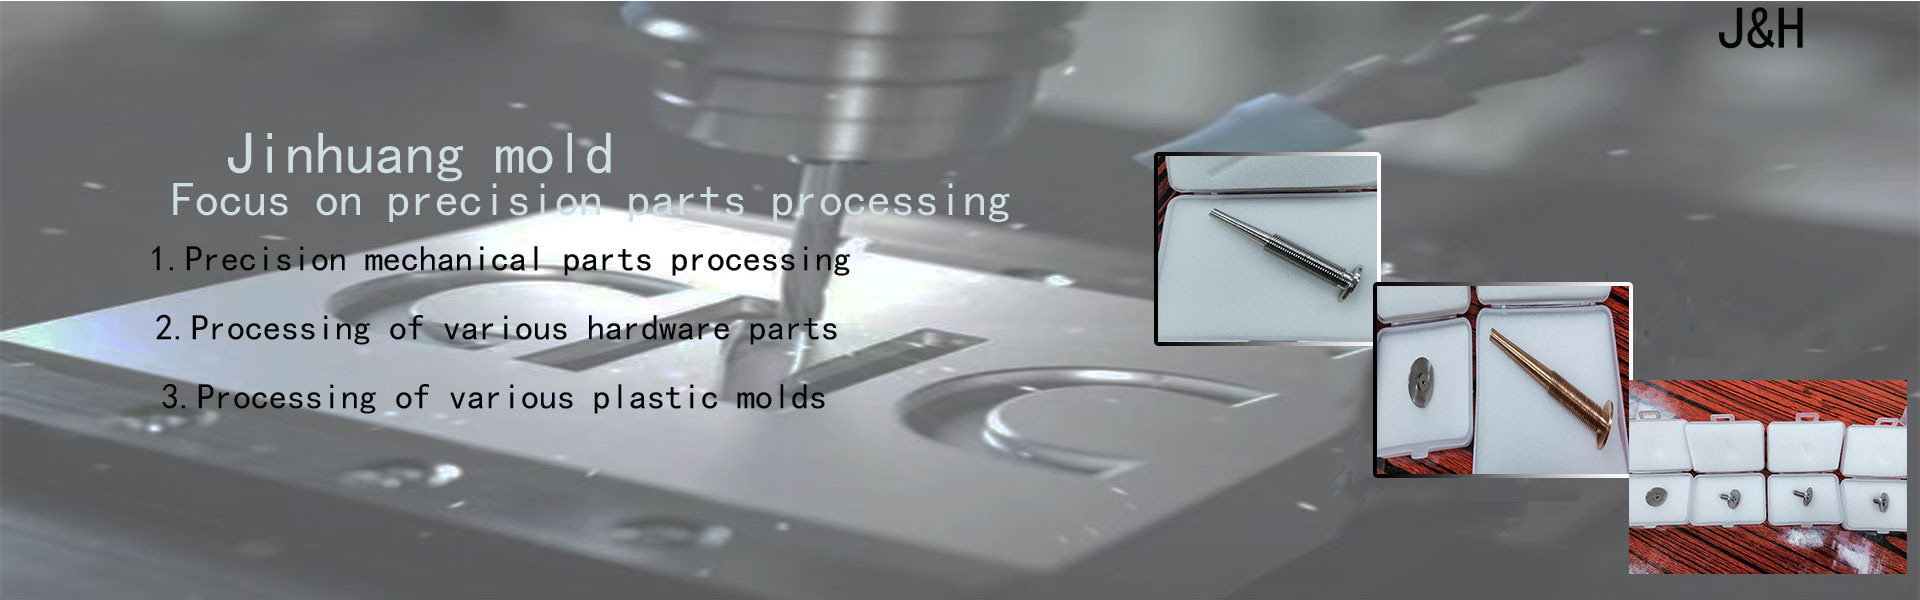 Plasisk mögel, hårdvaruform, precisionsdelar,Dongguan Jinhuang Mold Co., Ltd